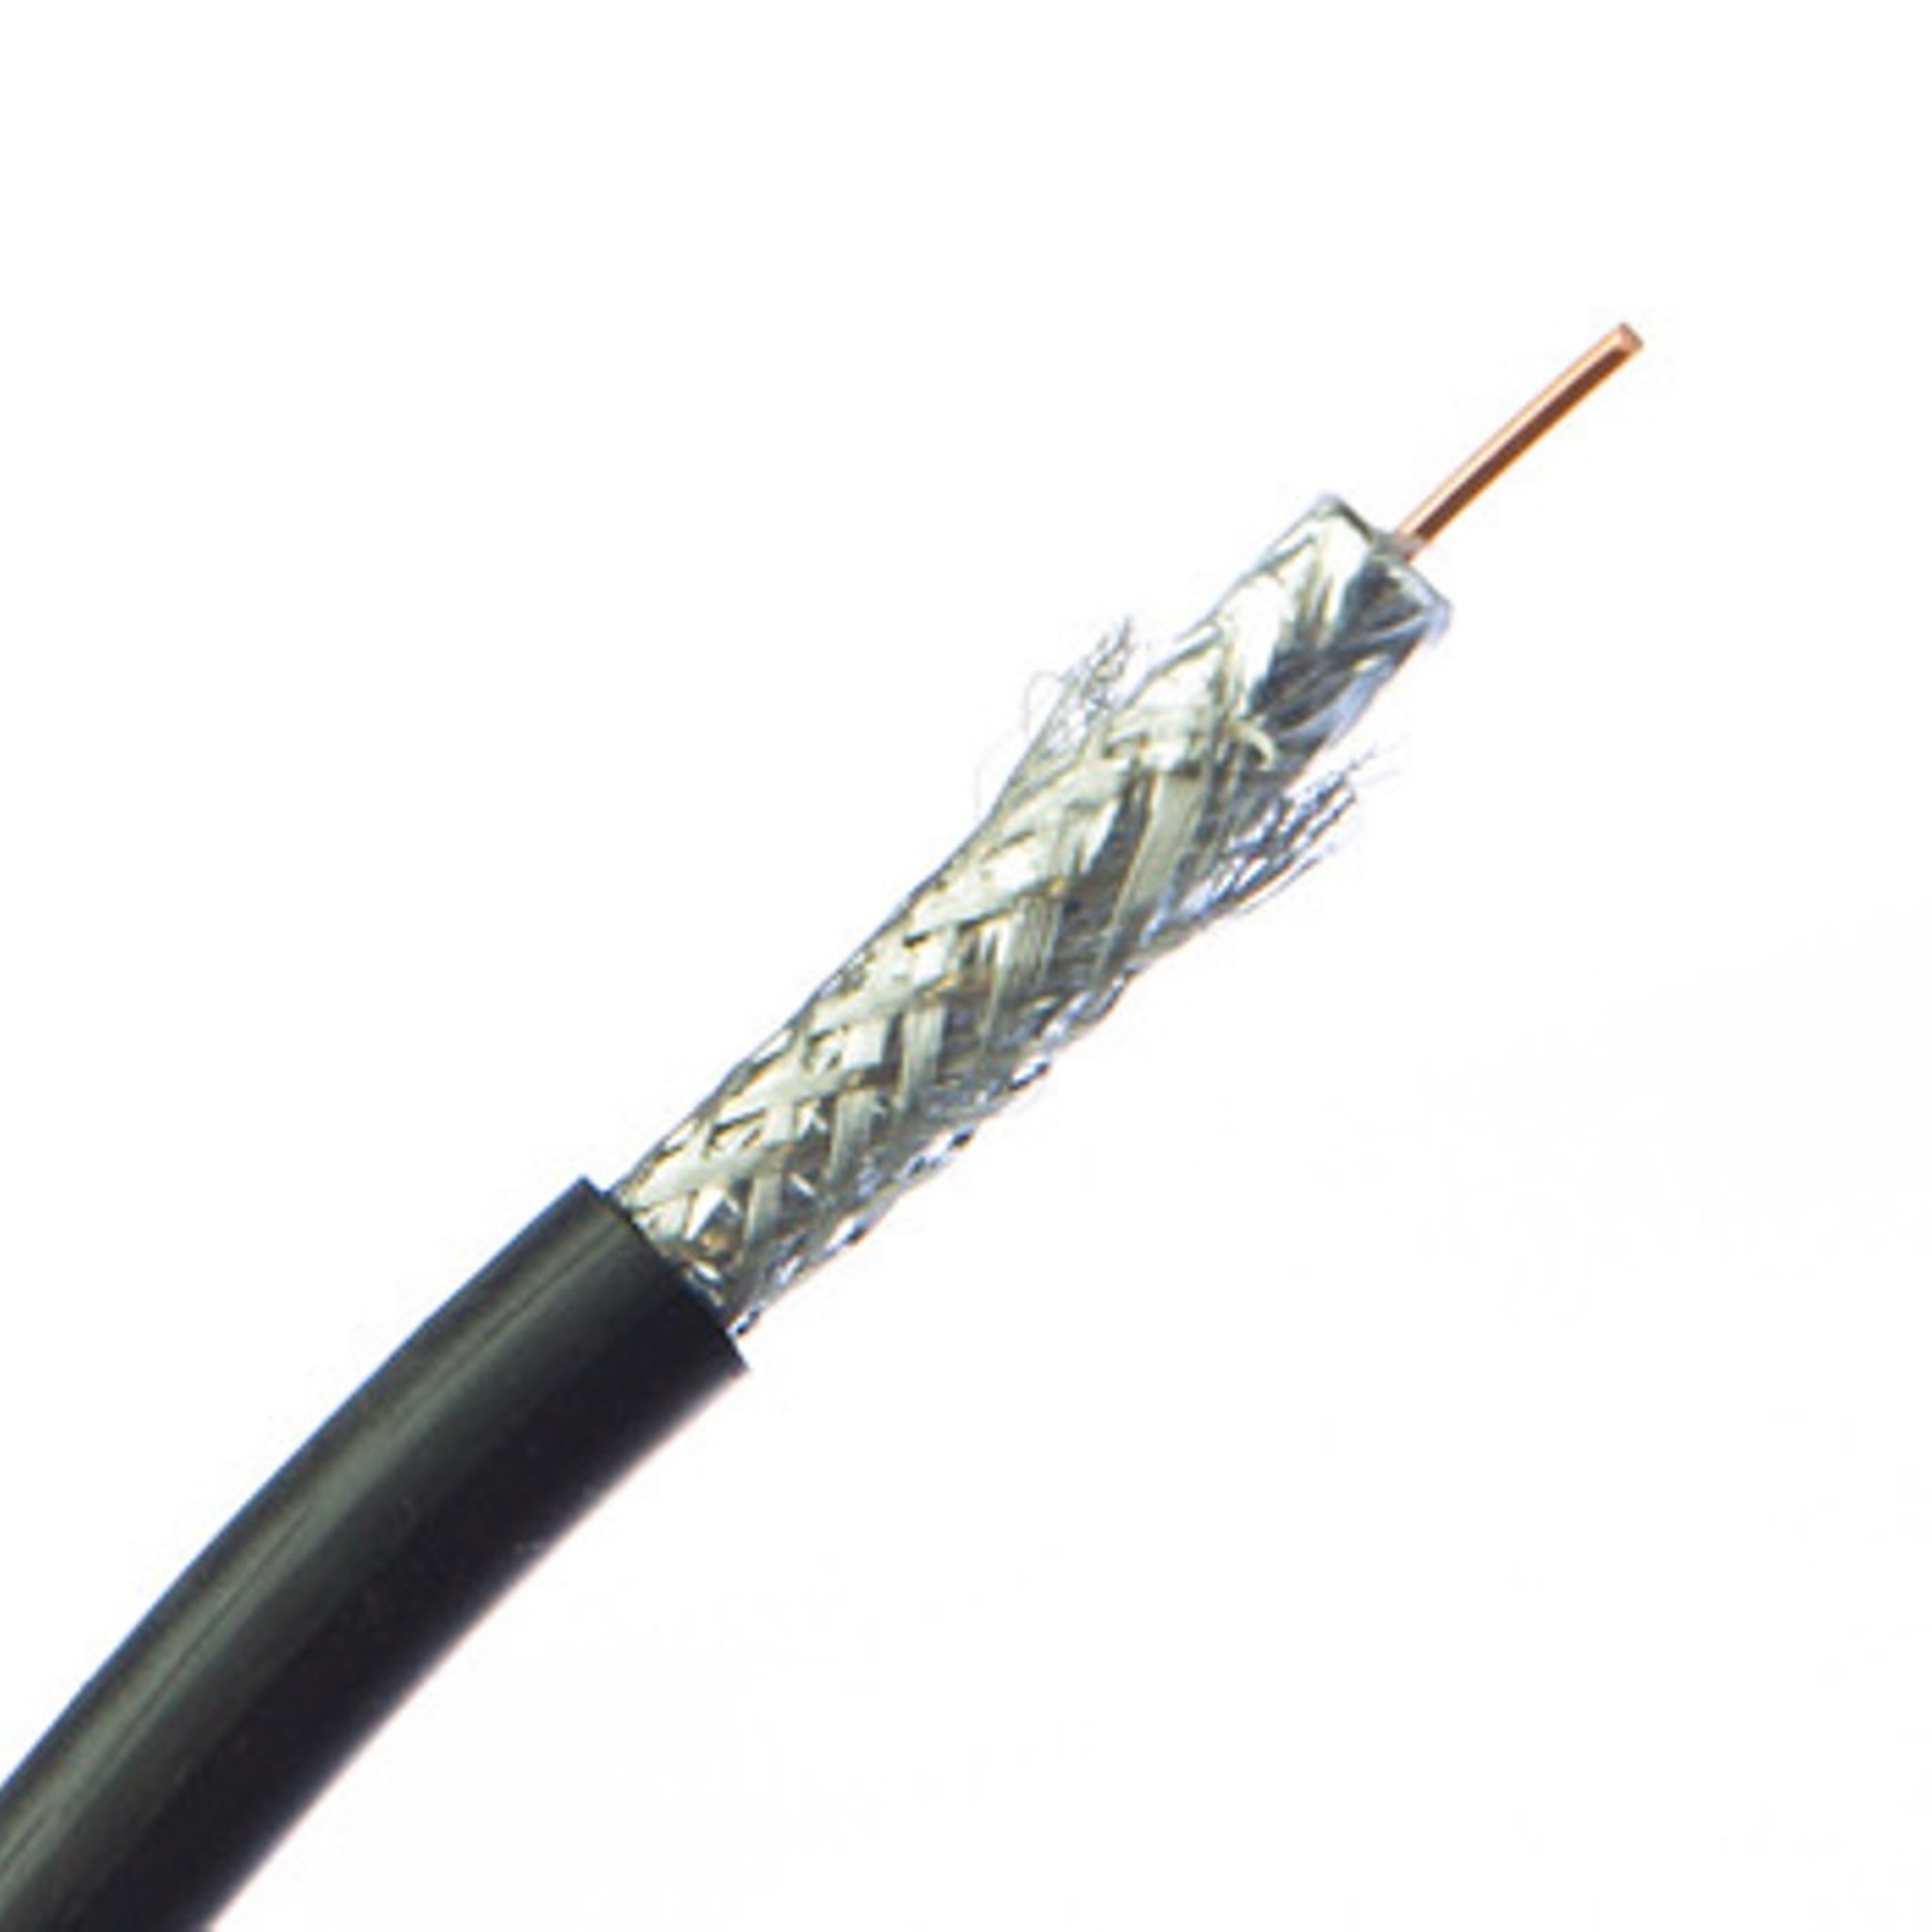 HLF 600 Coaxial Cable